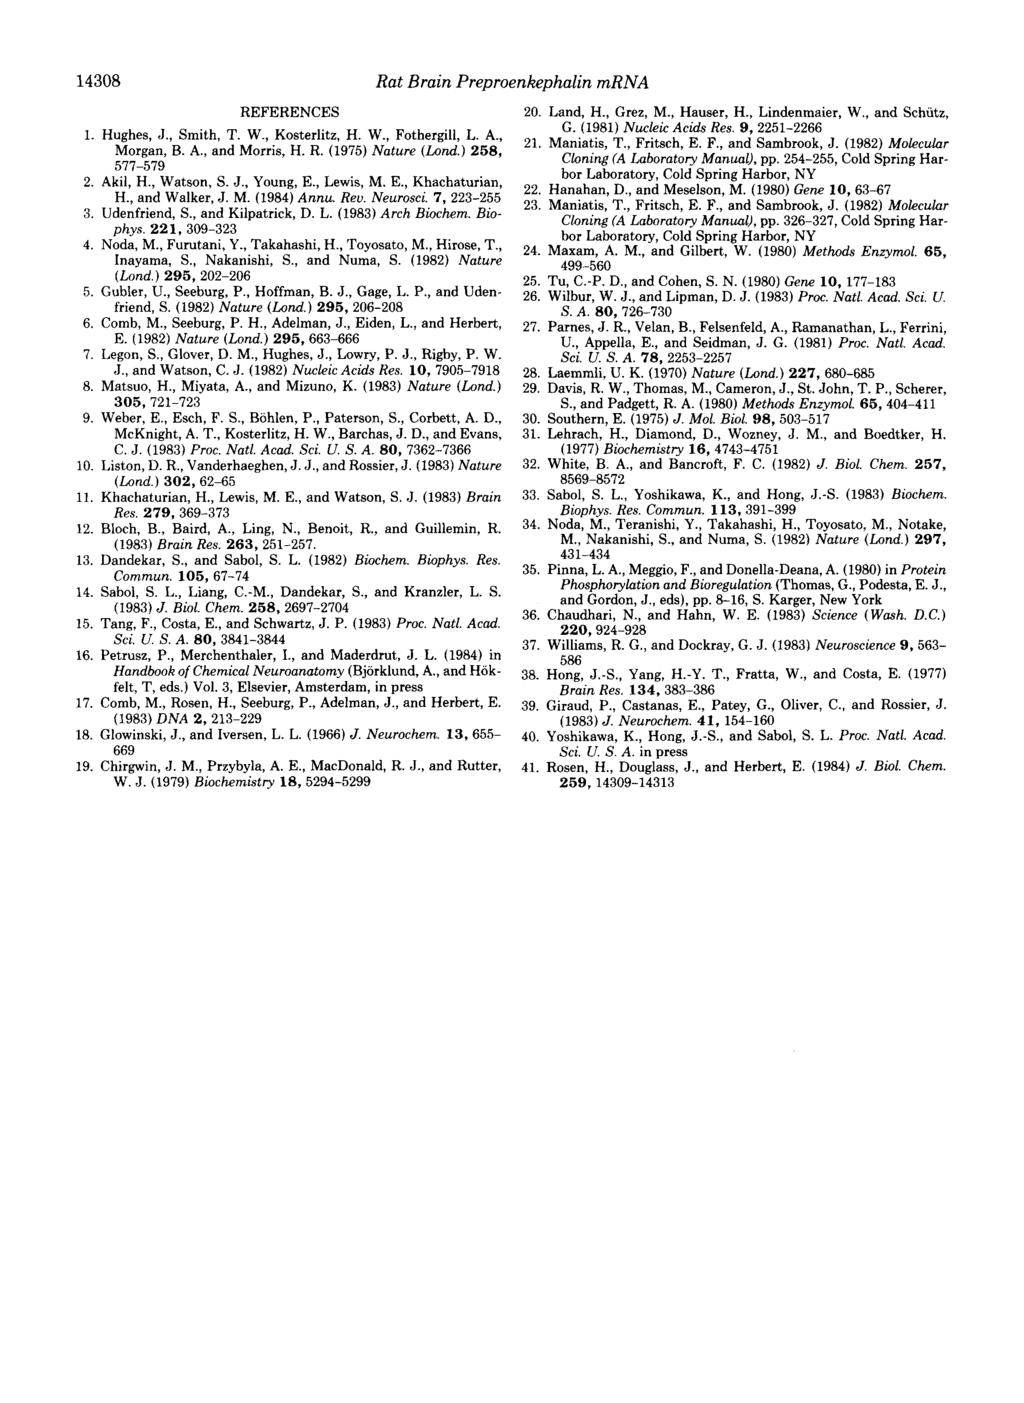 1438 Preproenkephalin Brain Rat REFERENCES 1. Hughes, J., Smith, T. W., Kosterlitz, H.W., Fothergill, L. A., Morgan, B. A., and Morris, H. R. (1975) Nature (Lond.) 258, 577-579 mrna 2. Land, H.